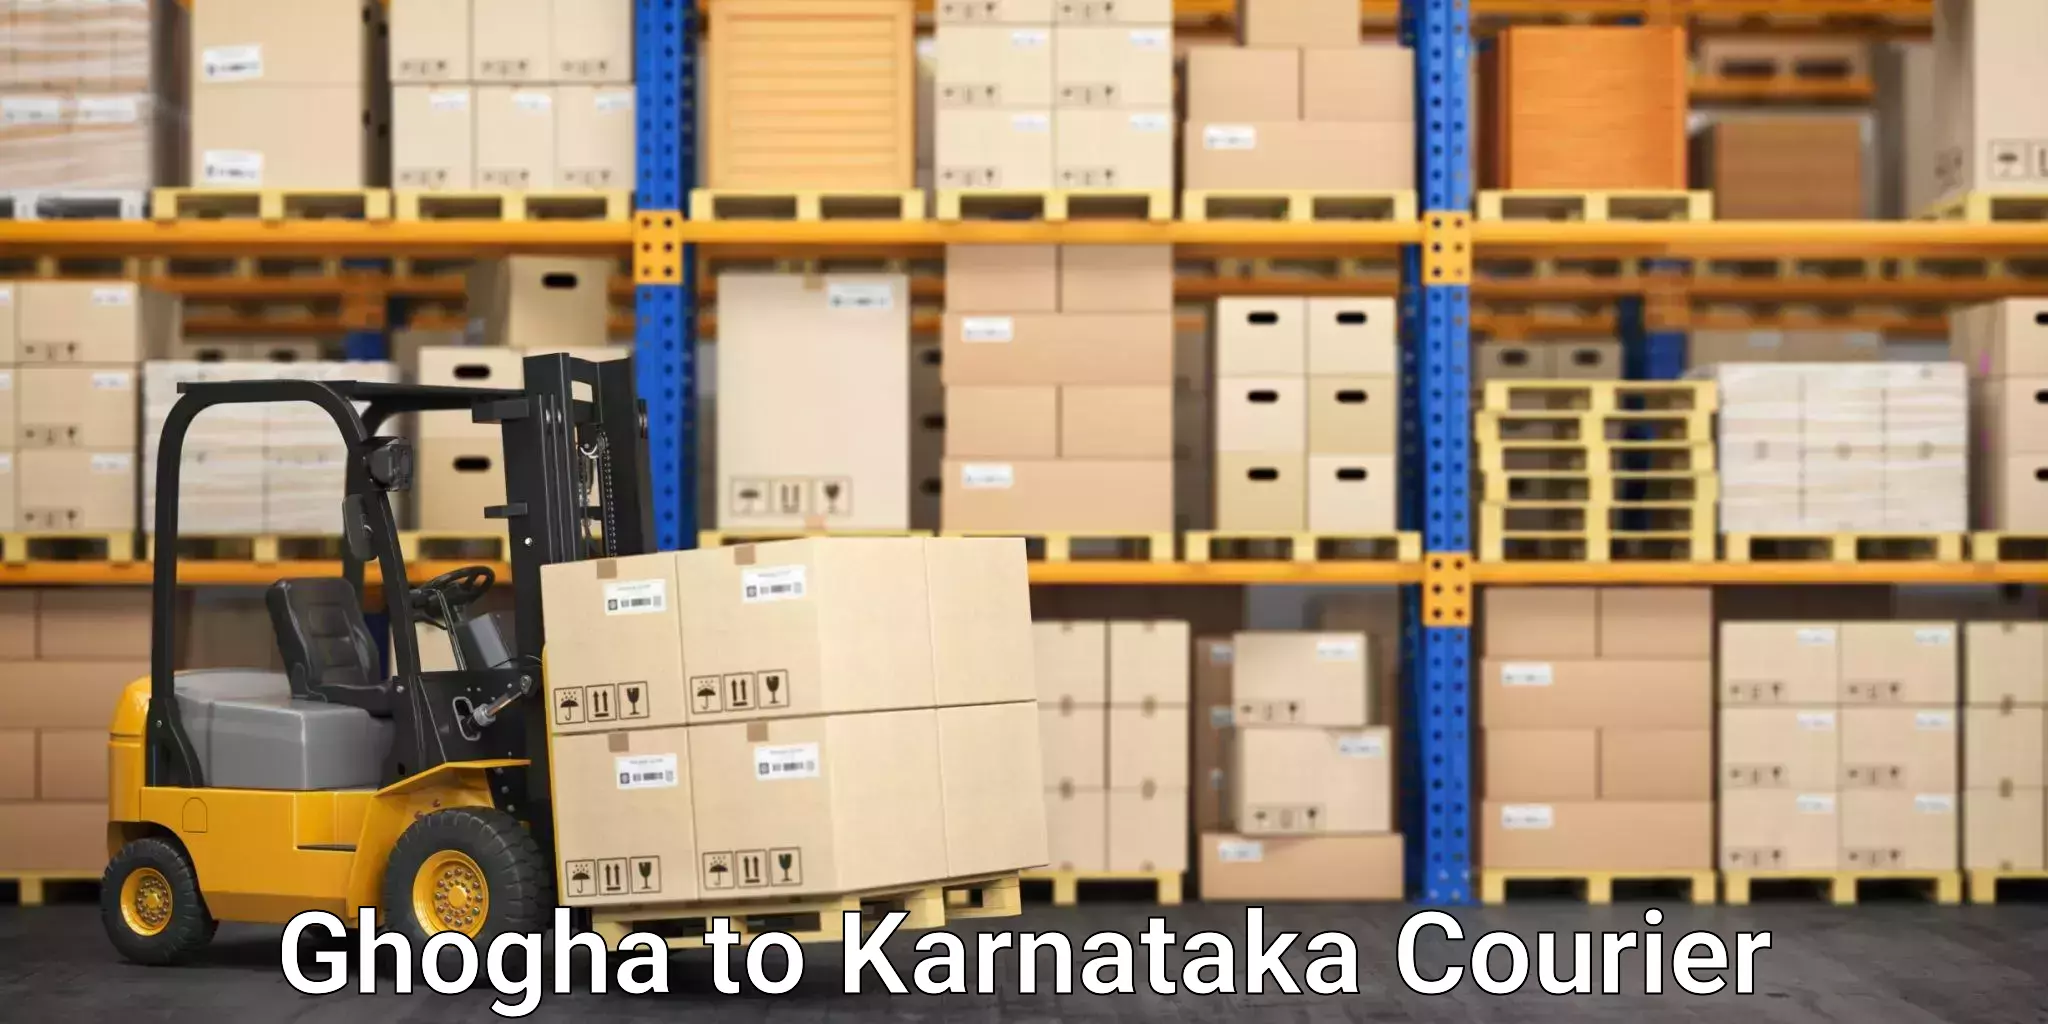 Reliable furniture movers Ghogha to Karnataka